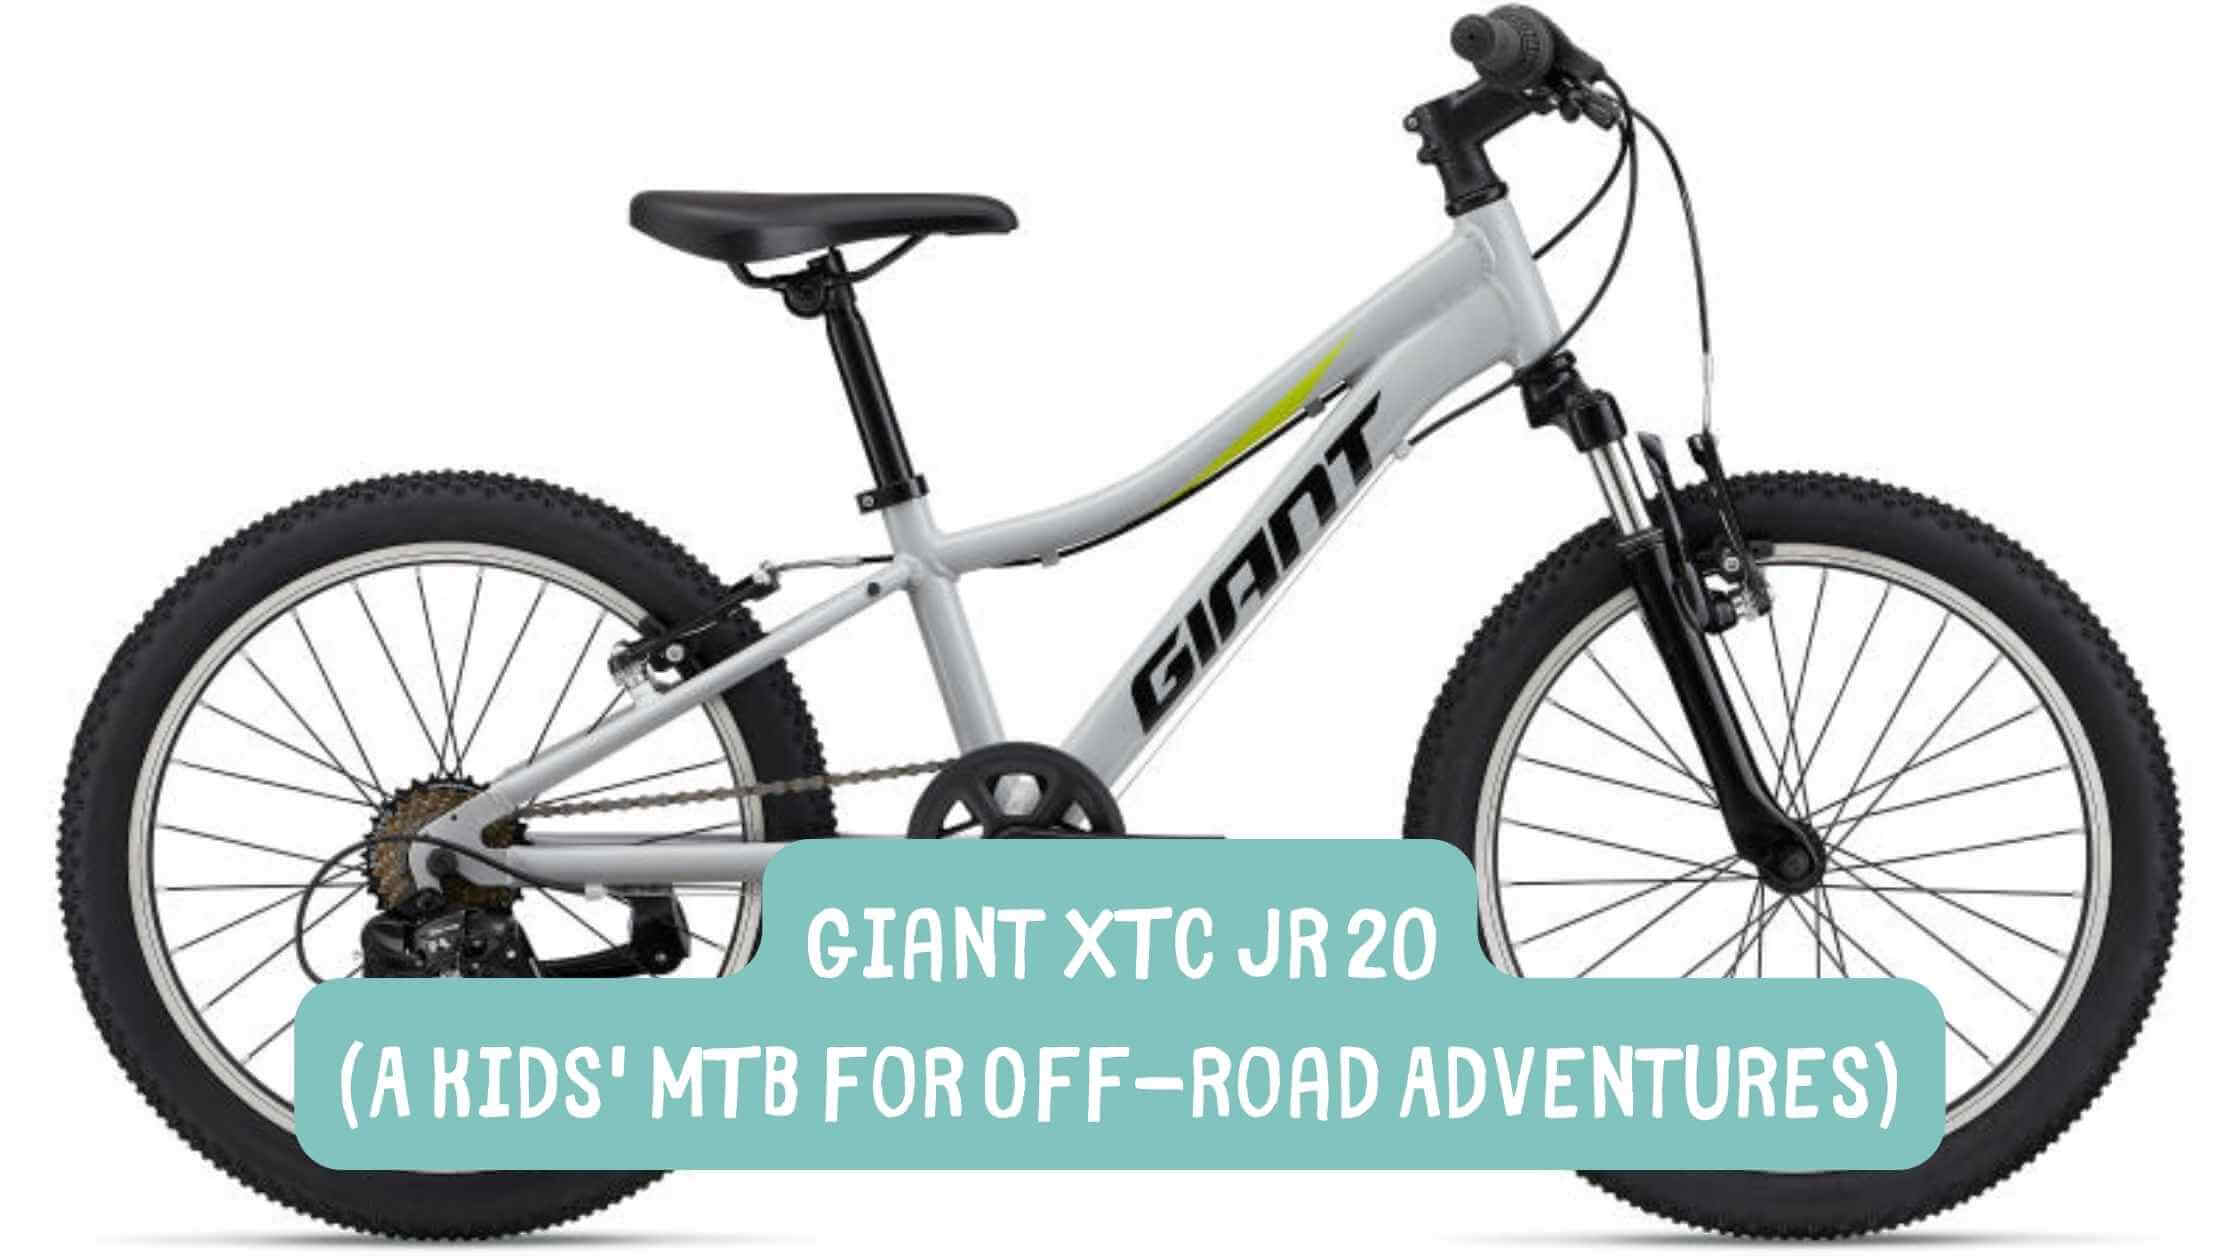 Giant XTC Jr 20